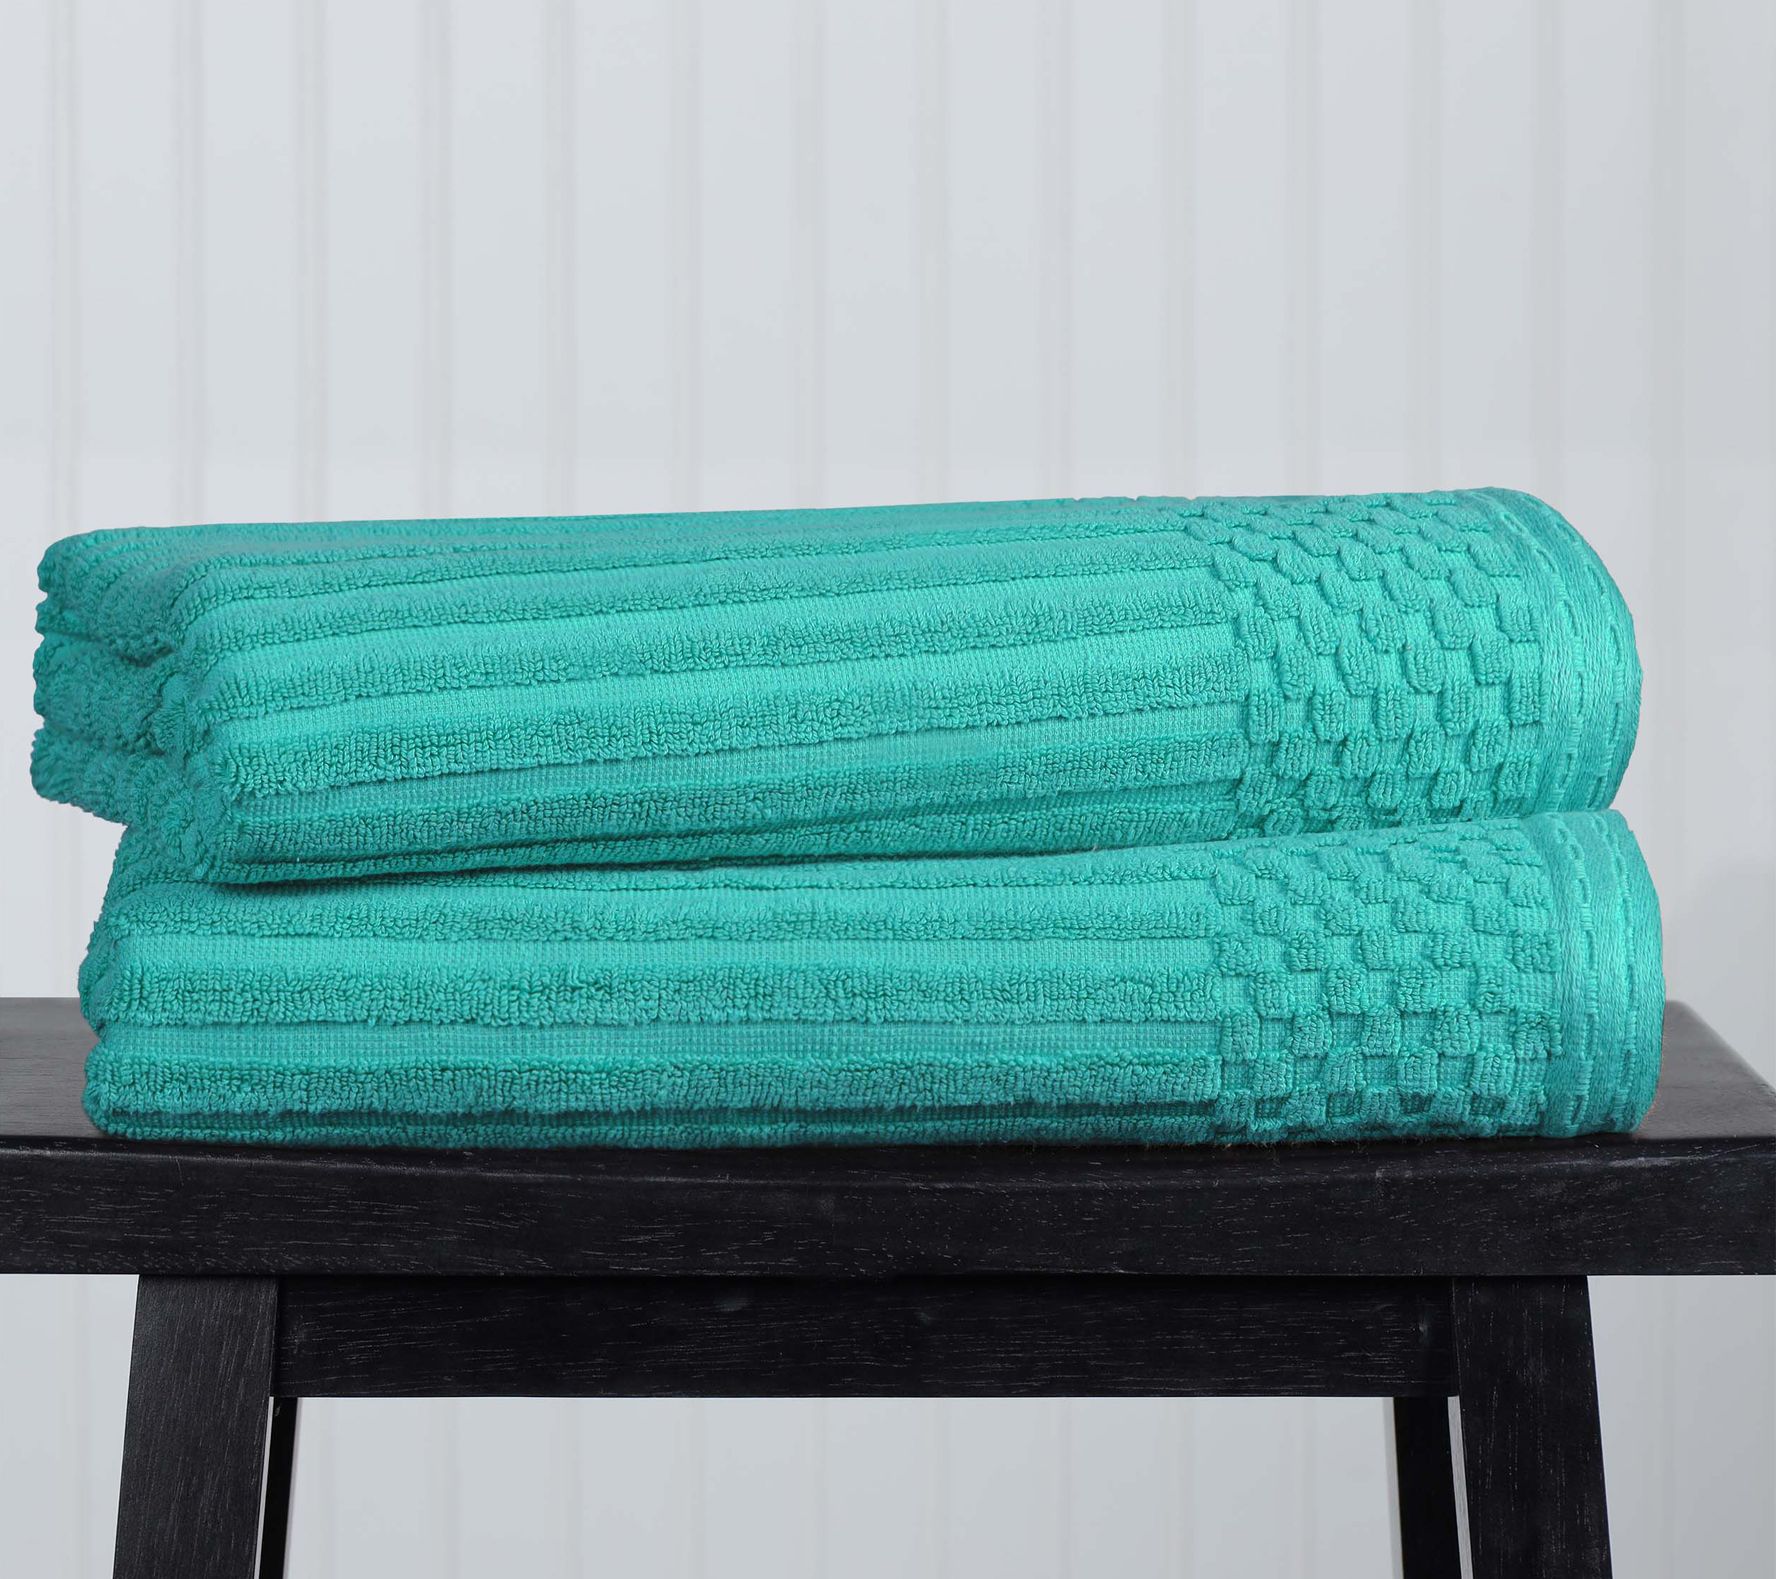 Superior Soho Collection 6 Piece 100% Cotton Bath Towel Set, Navy